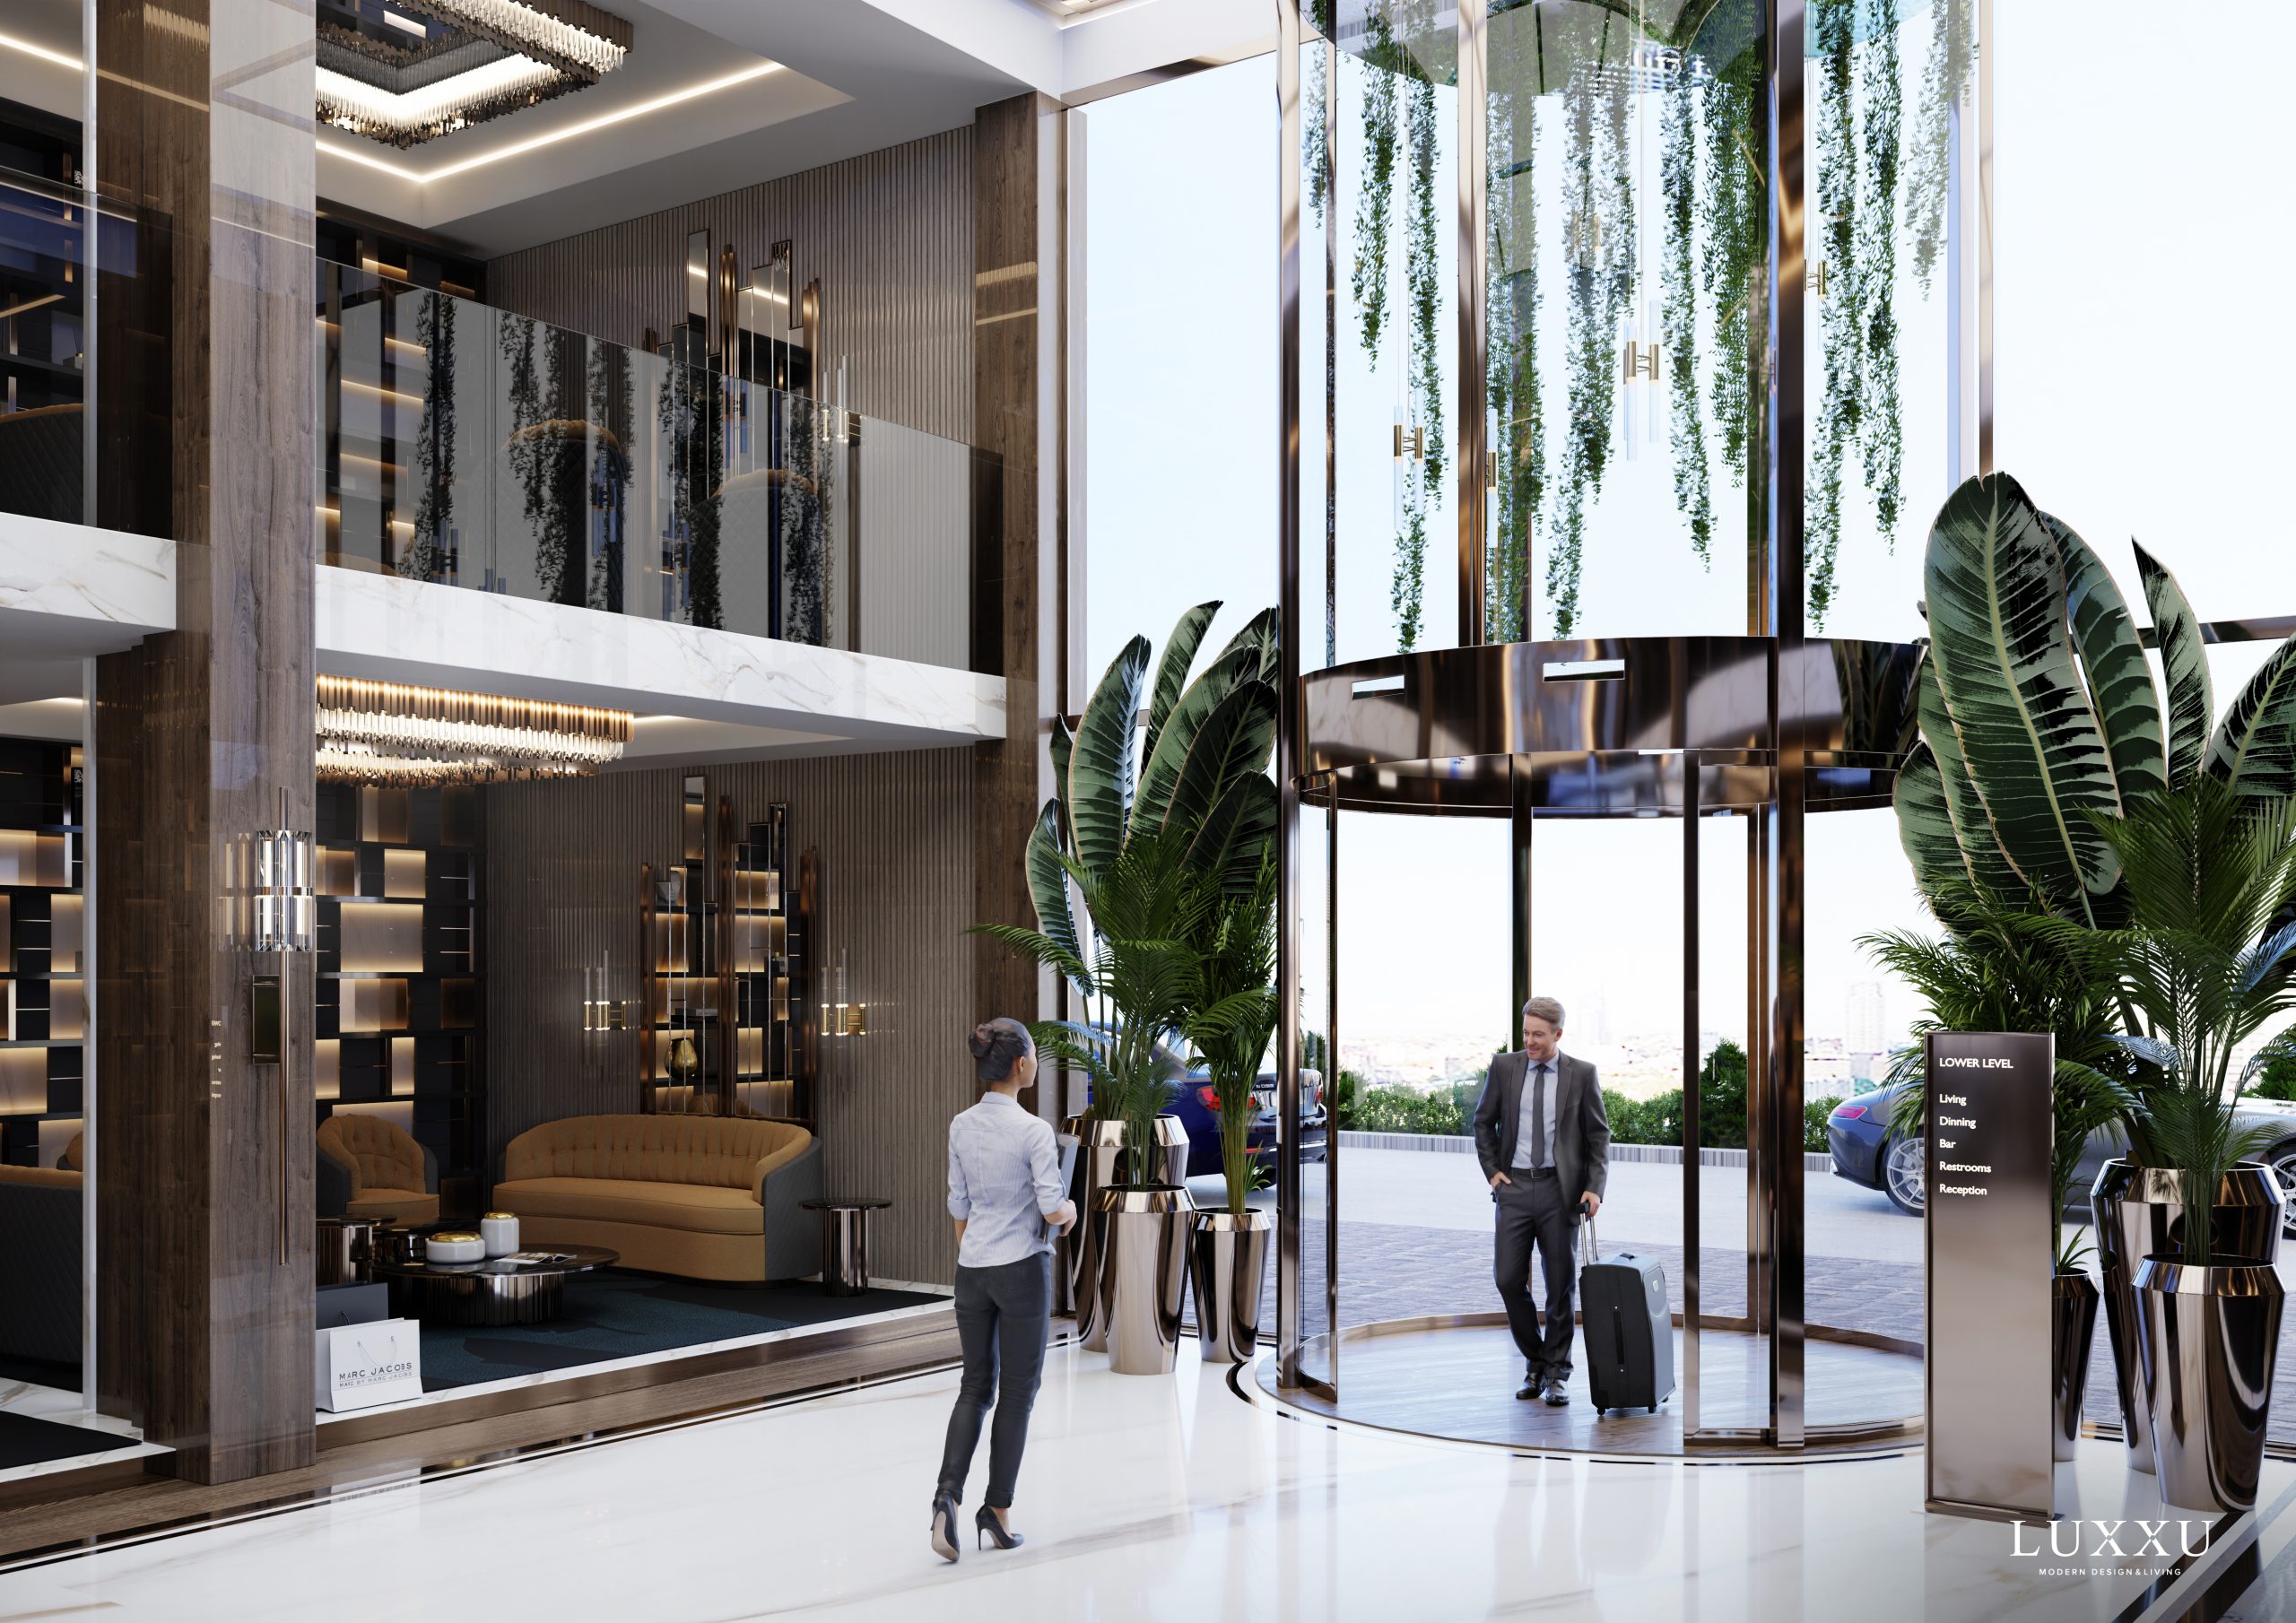 Luxxu’s New Hotel - Follow The Luxury Path in Sydney